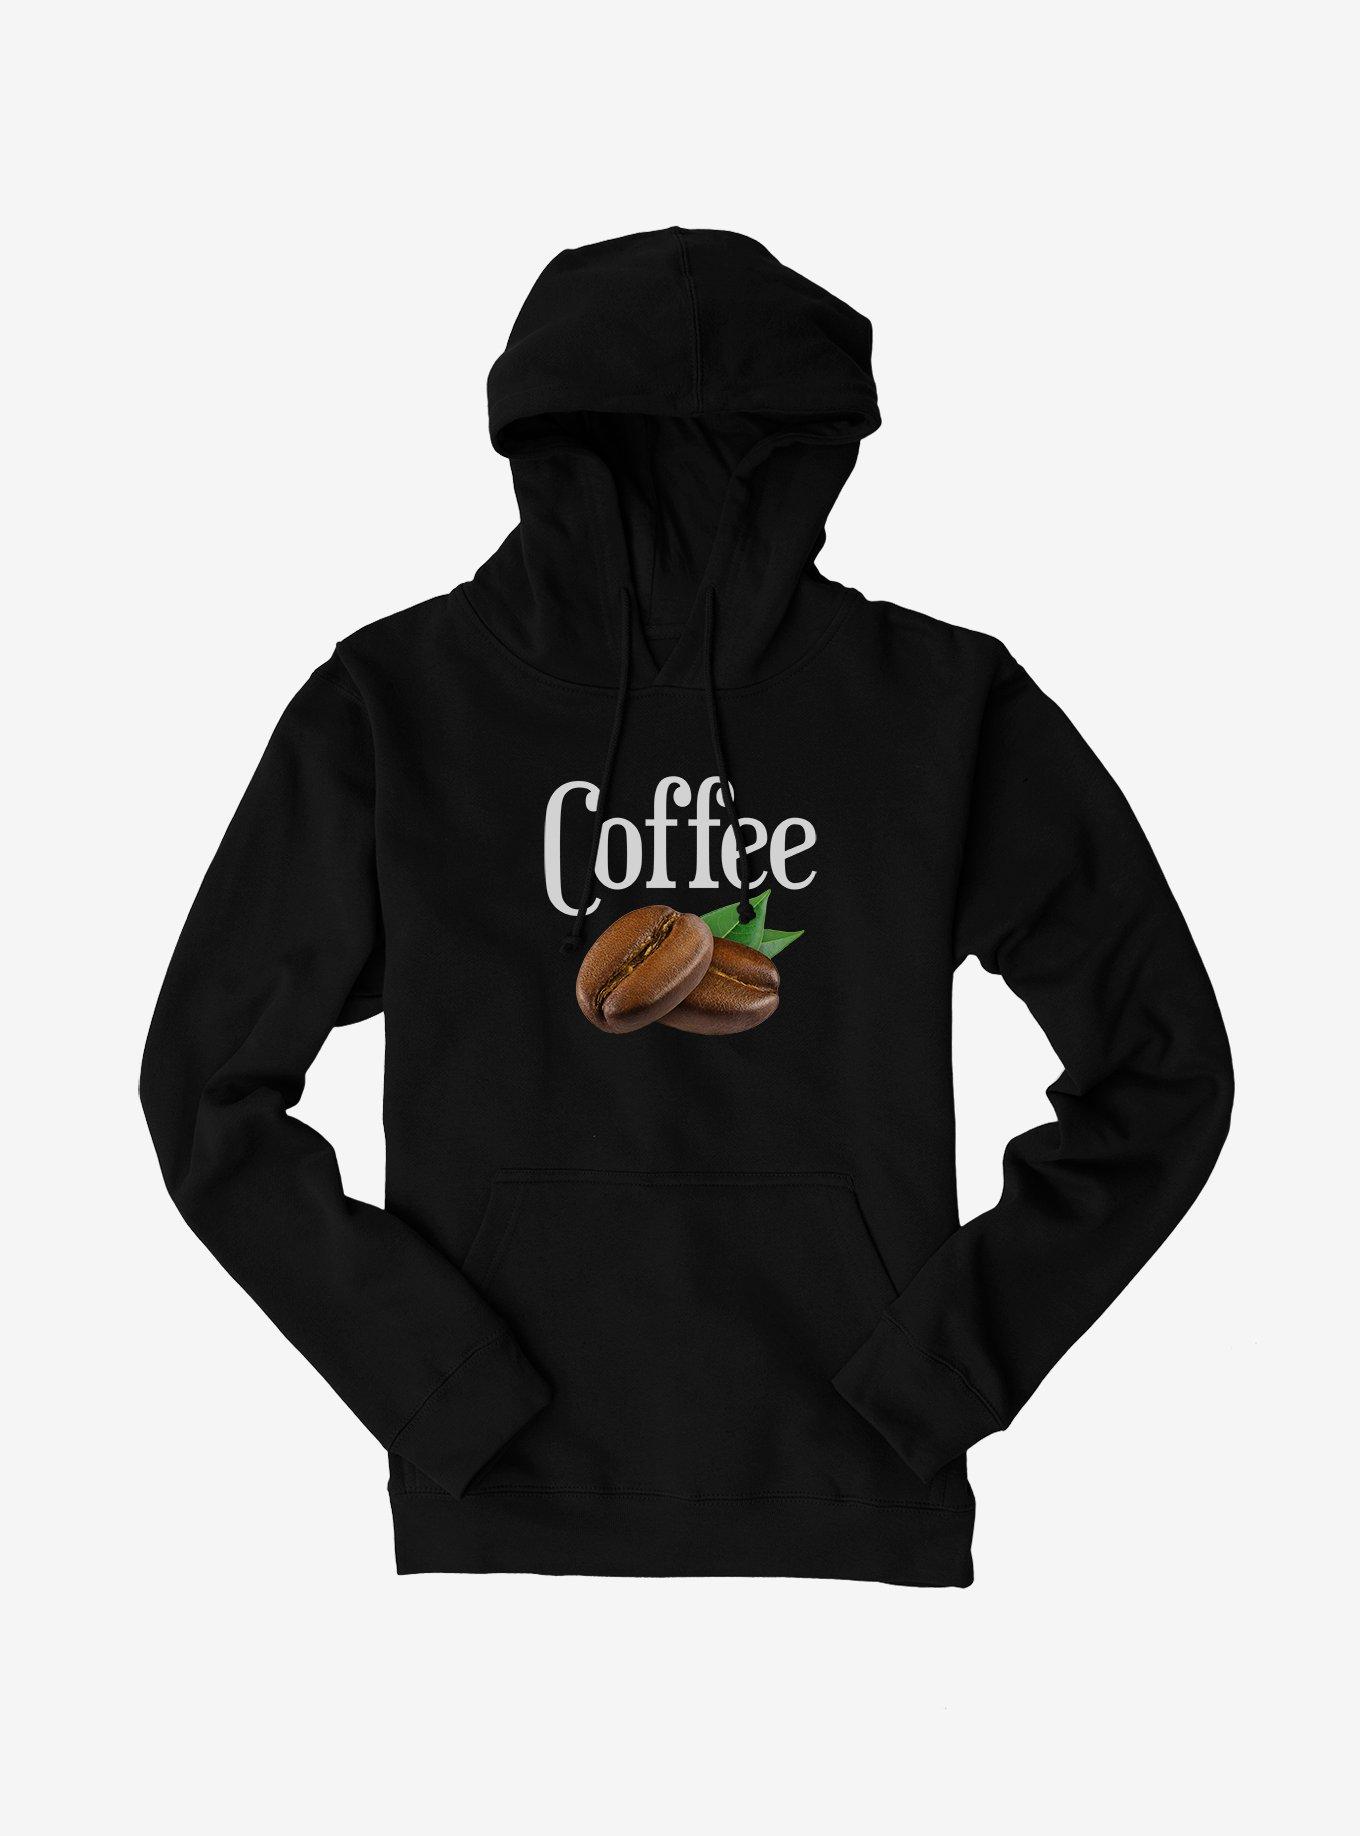 Hot Topic Coffee Hoodie